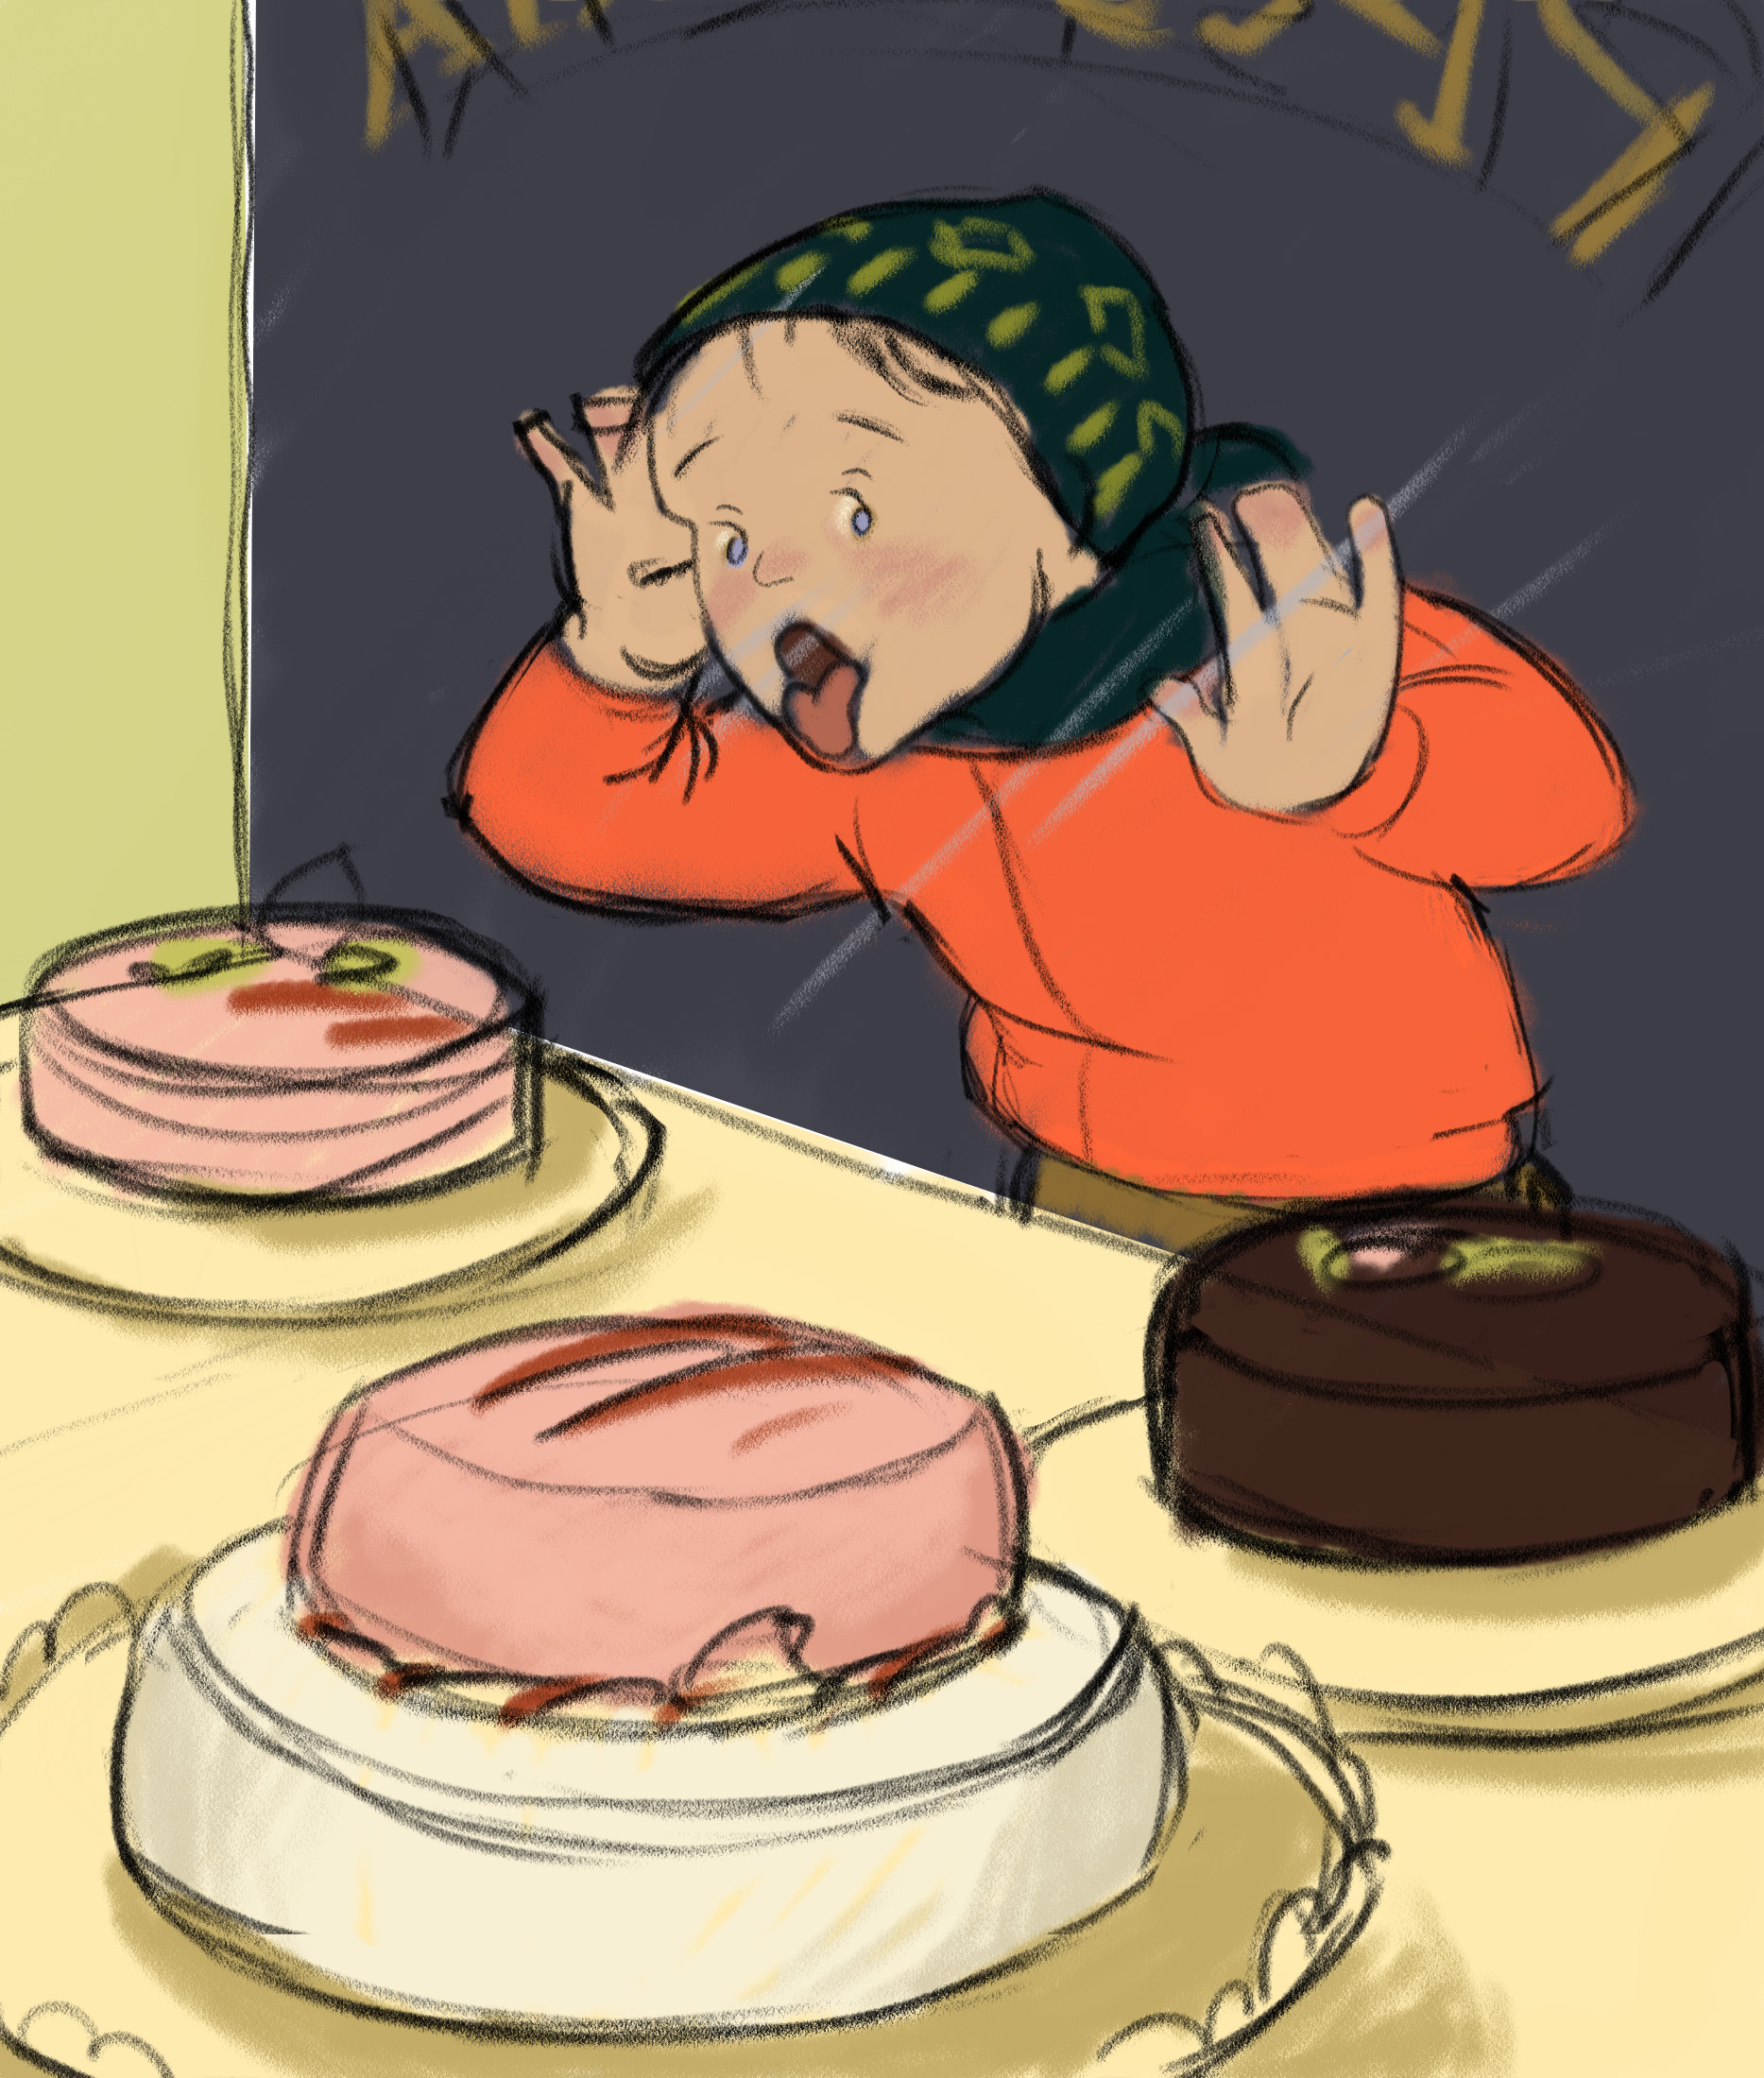 Boy licking window with cakes.jpg